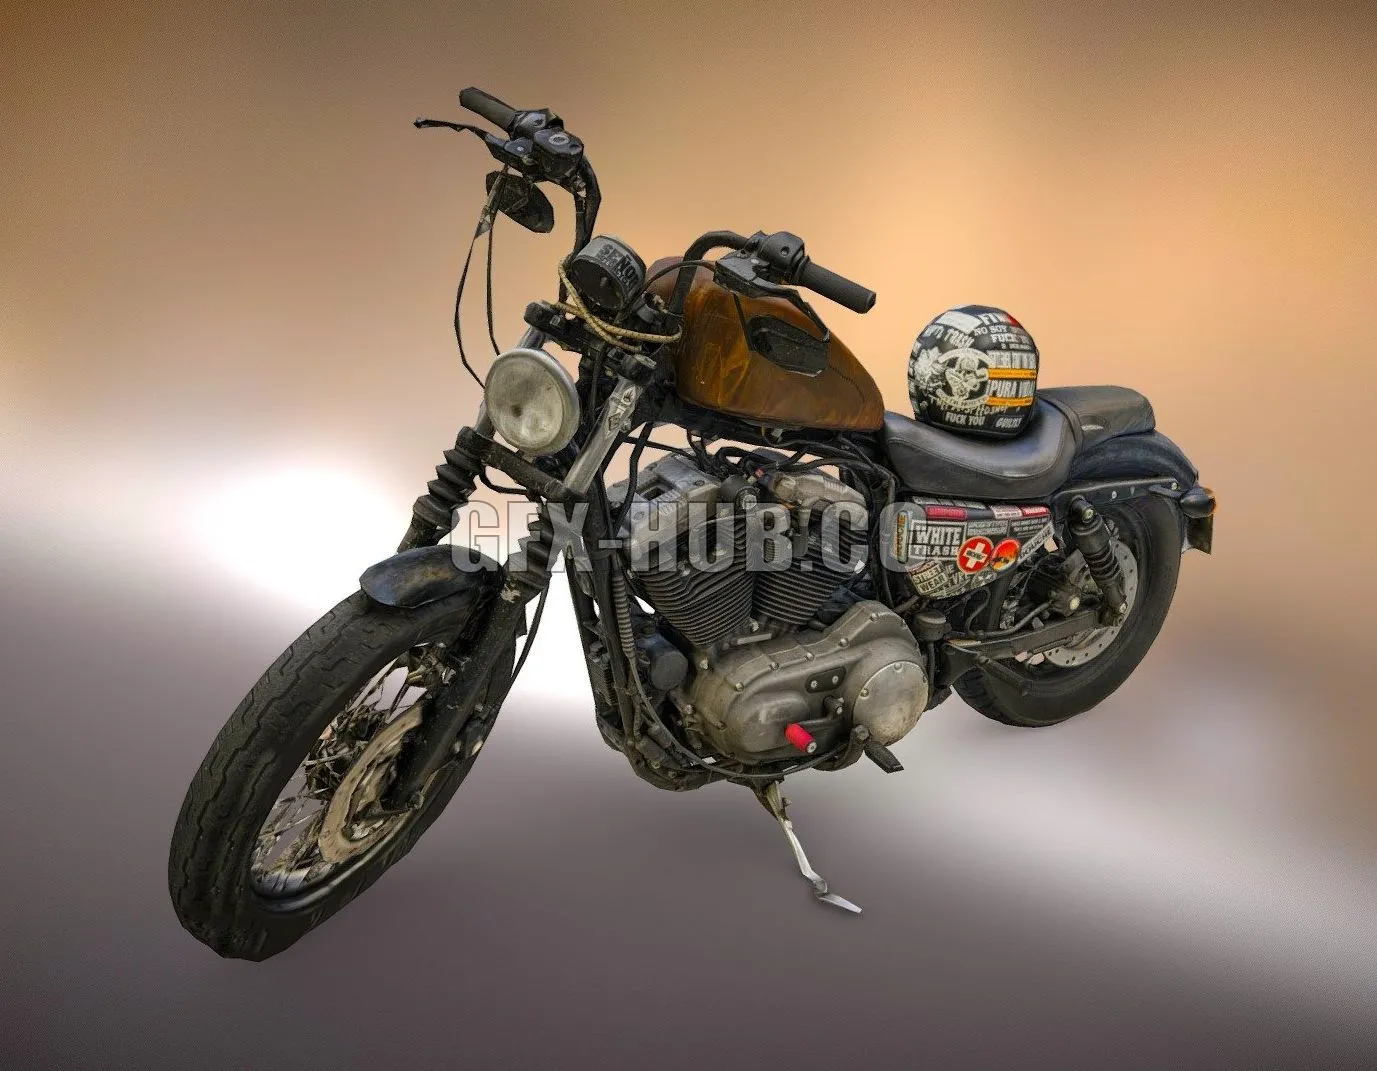 CAR – Senor MotorCycle Bike -Photogrammetry Scan 3D Model